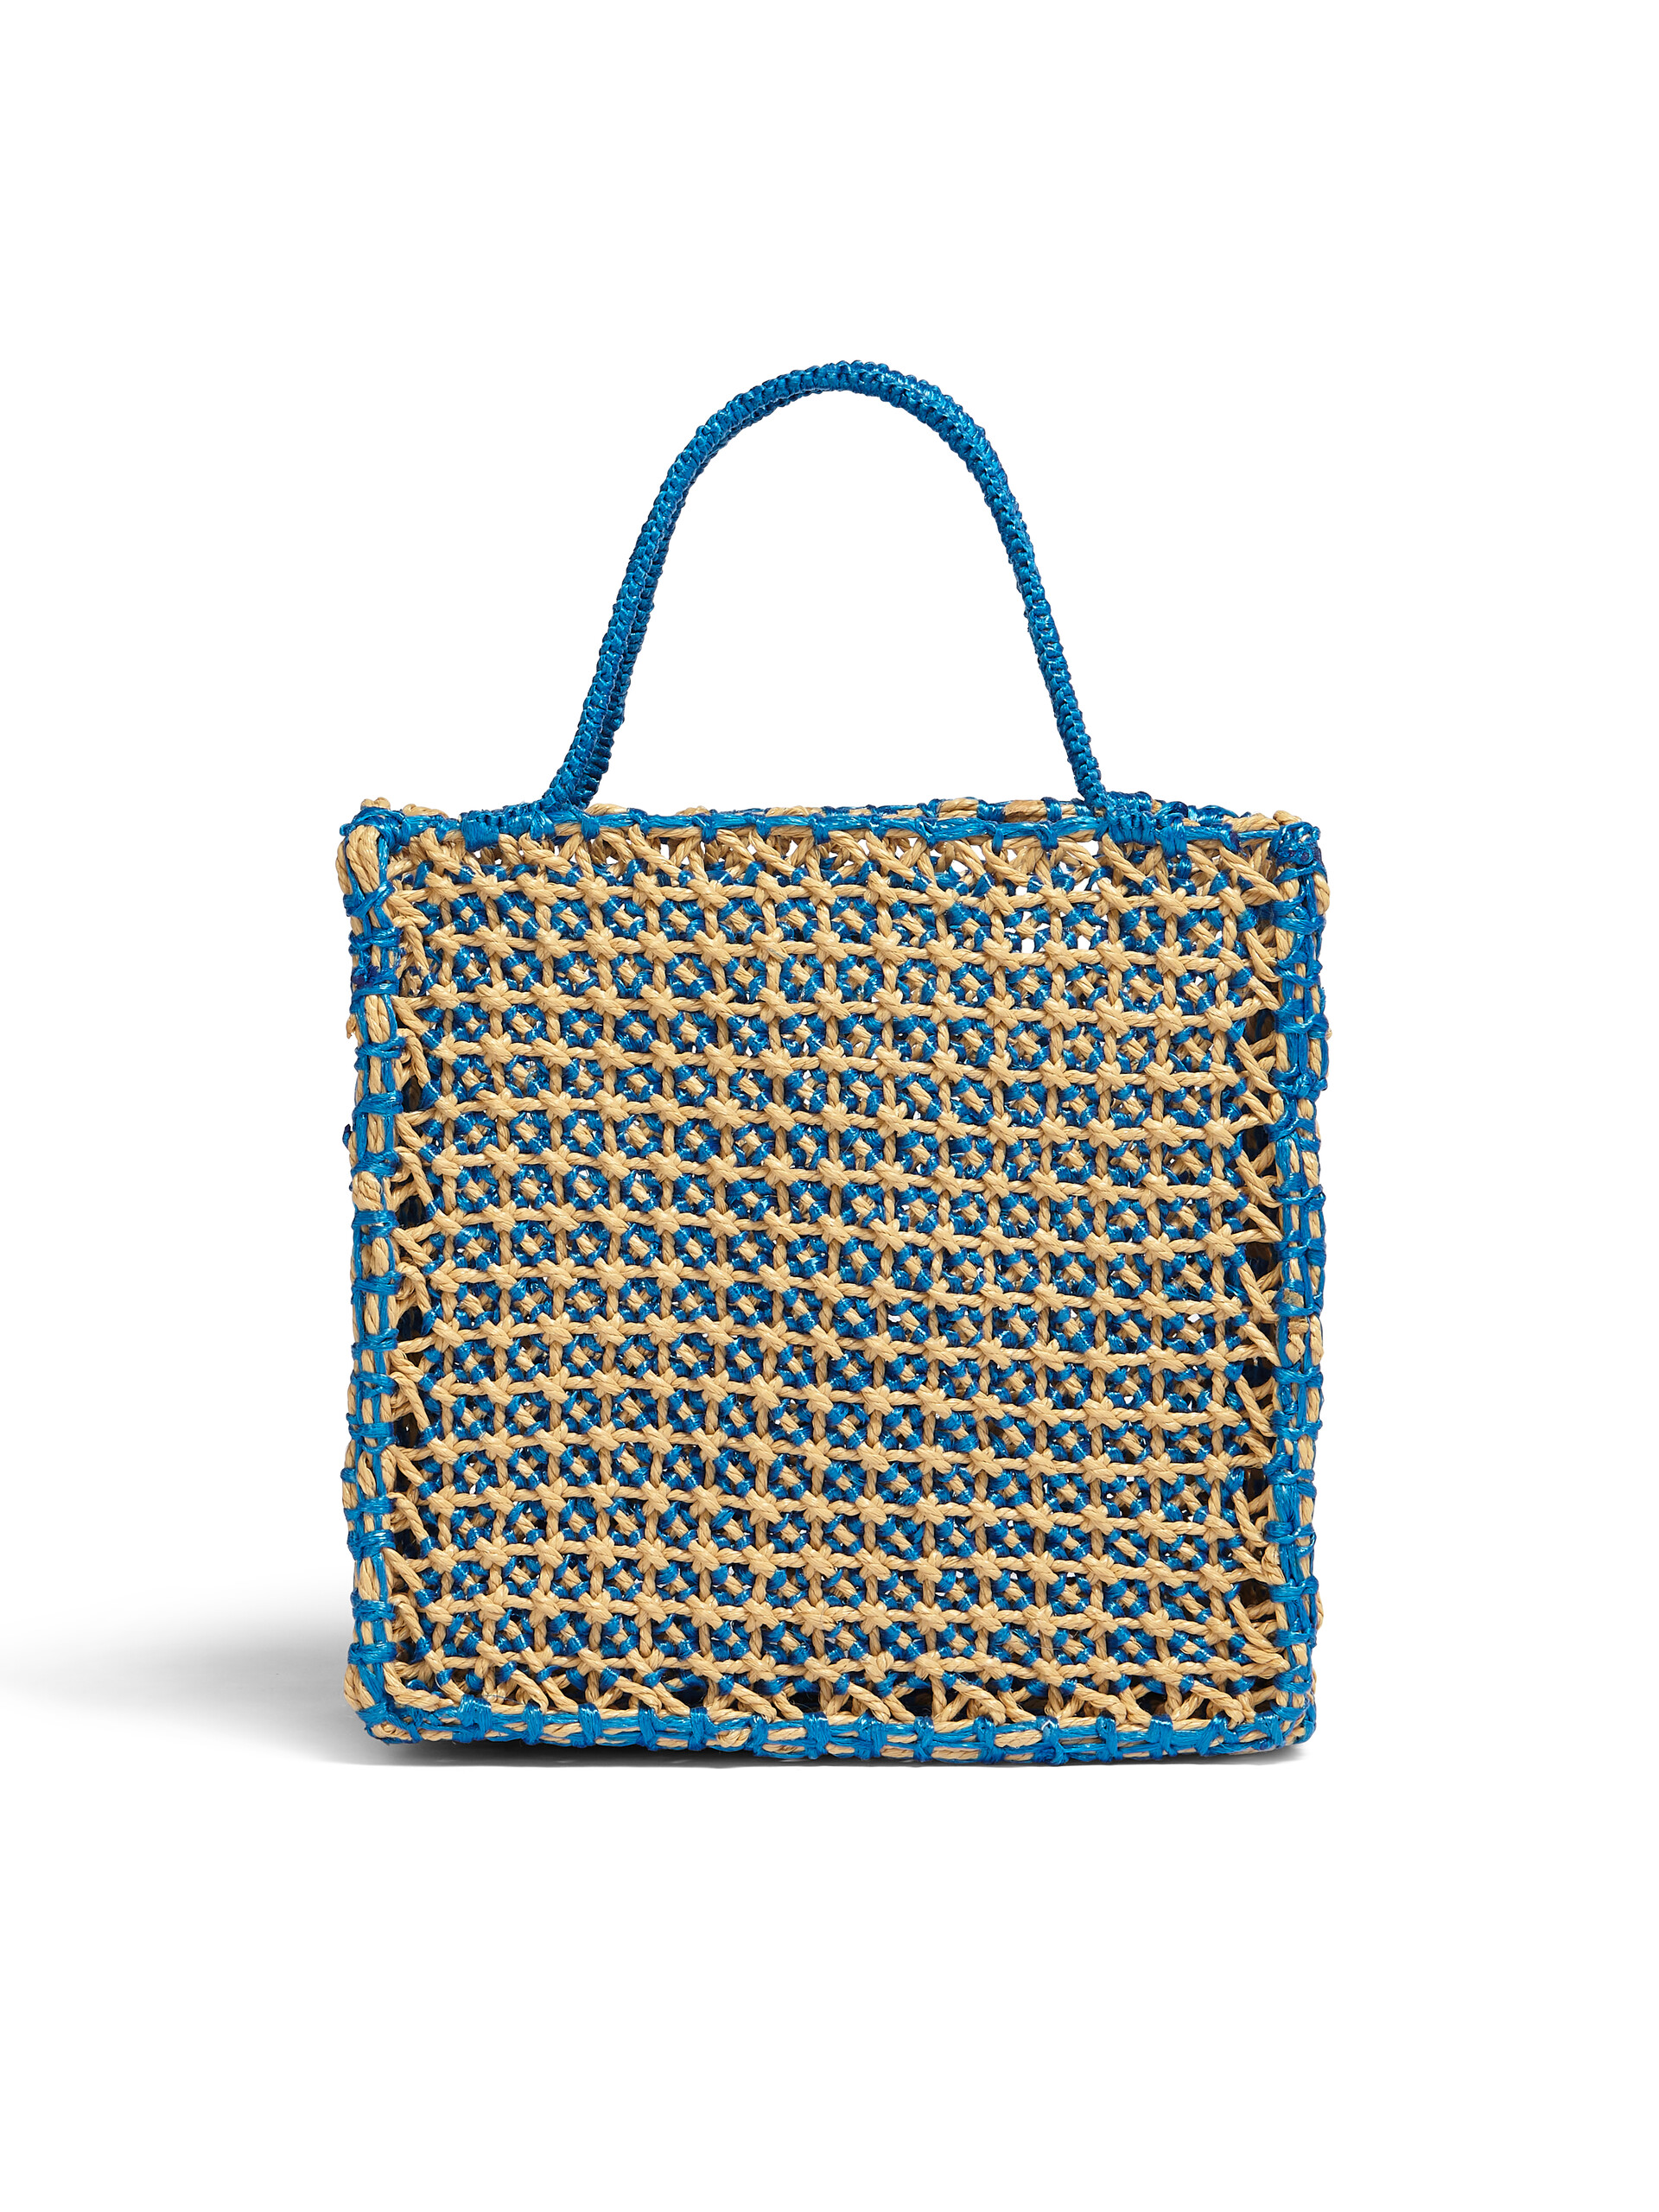 MARNI MARKET JURTA large bag in pale blue and beige crochet - Bags - Image 3